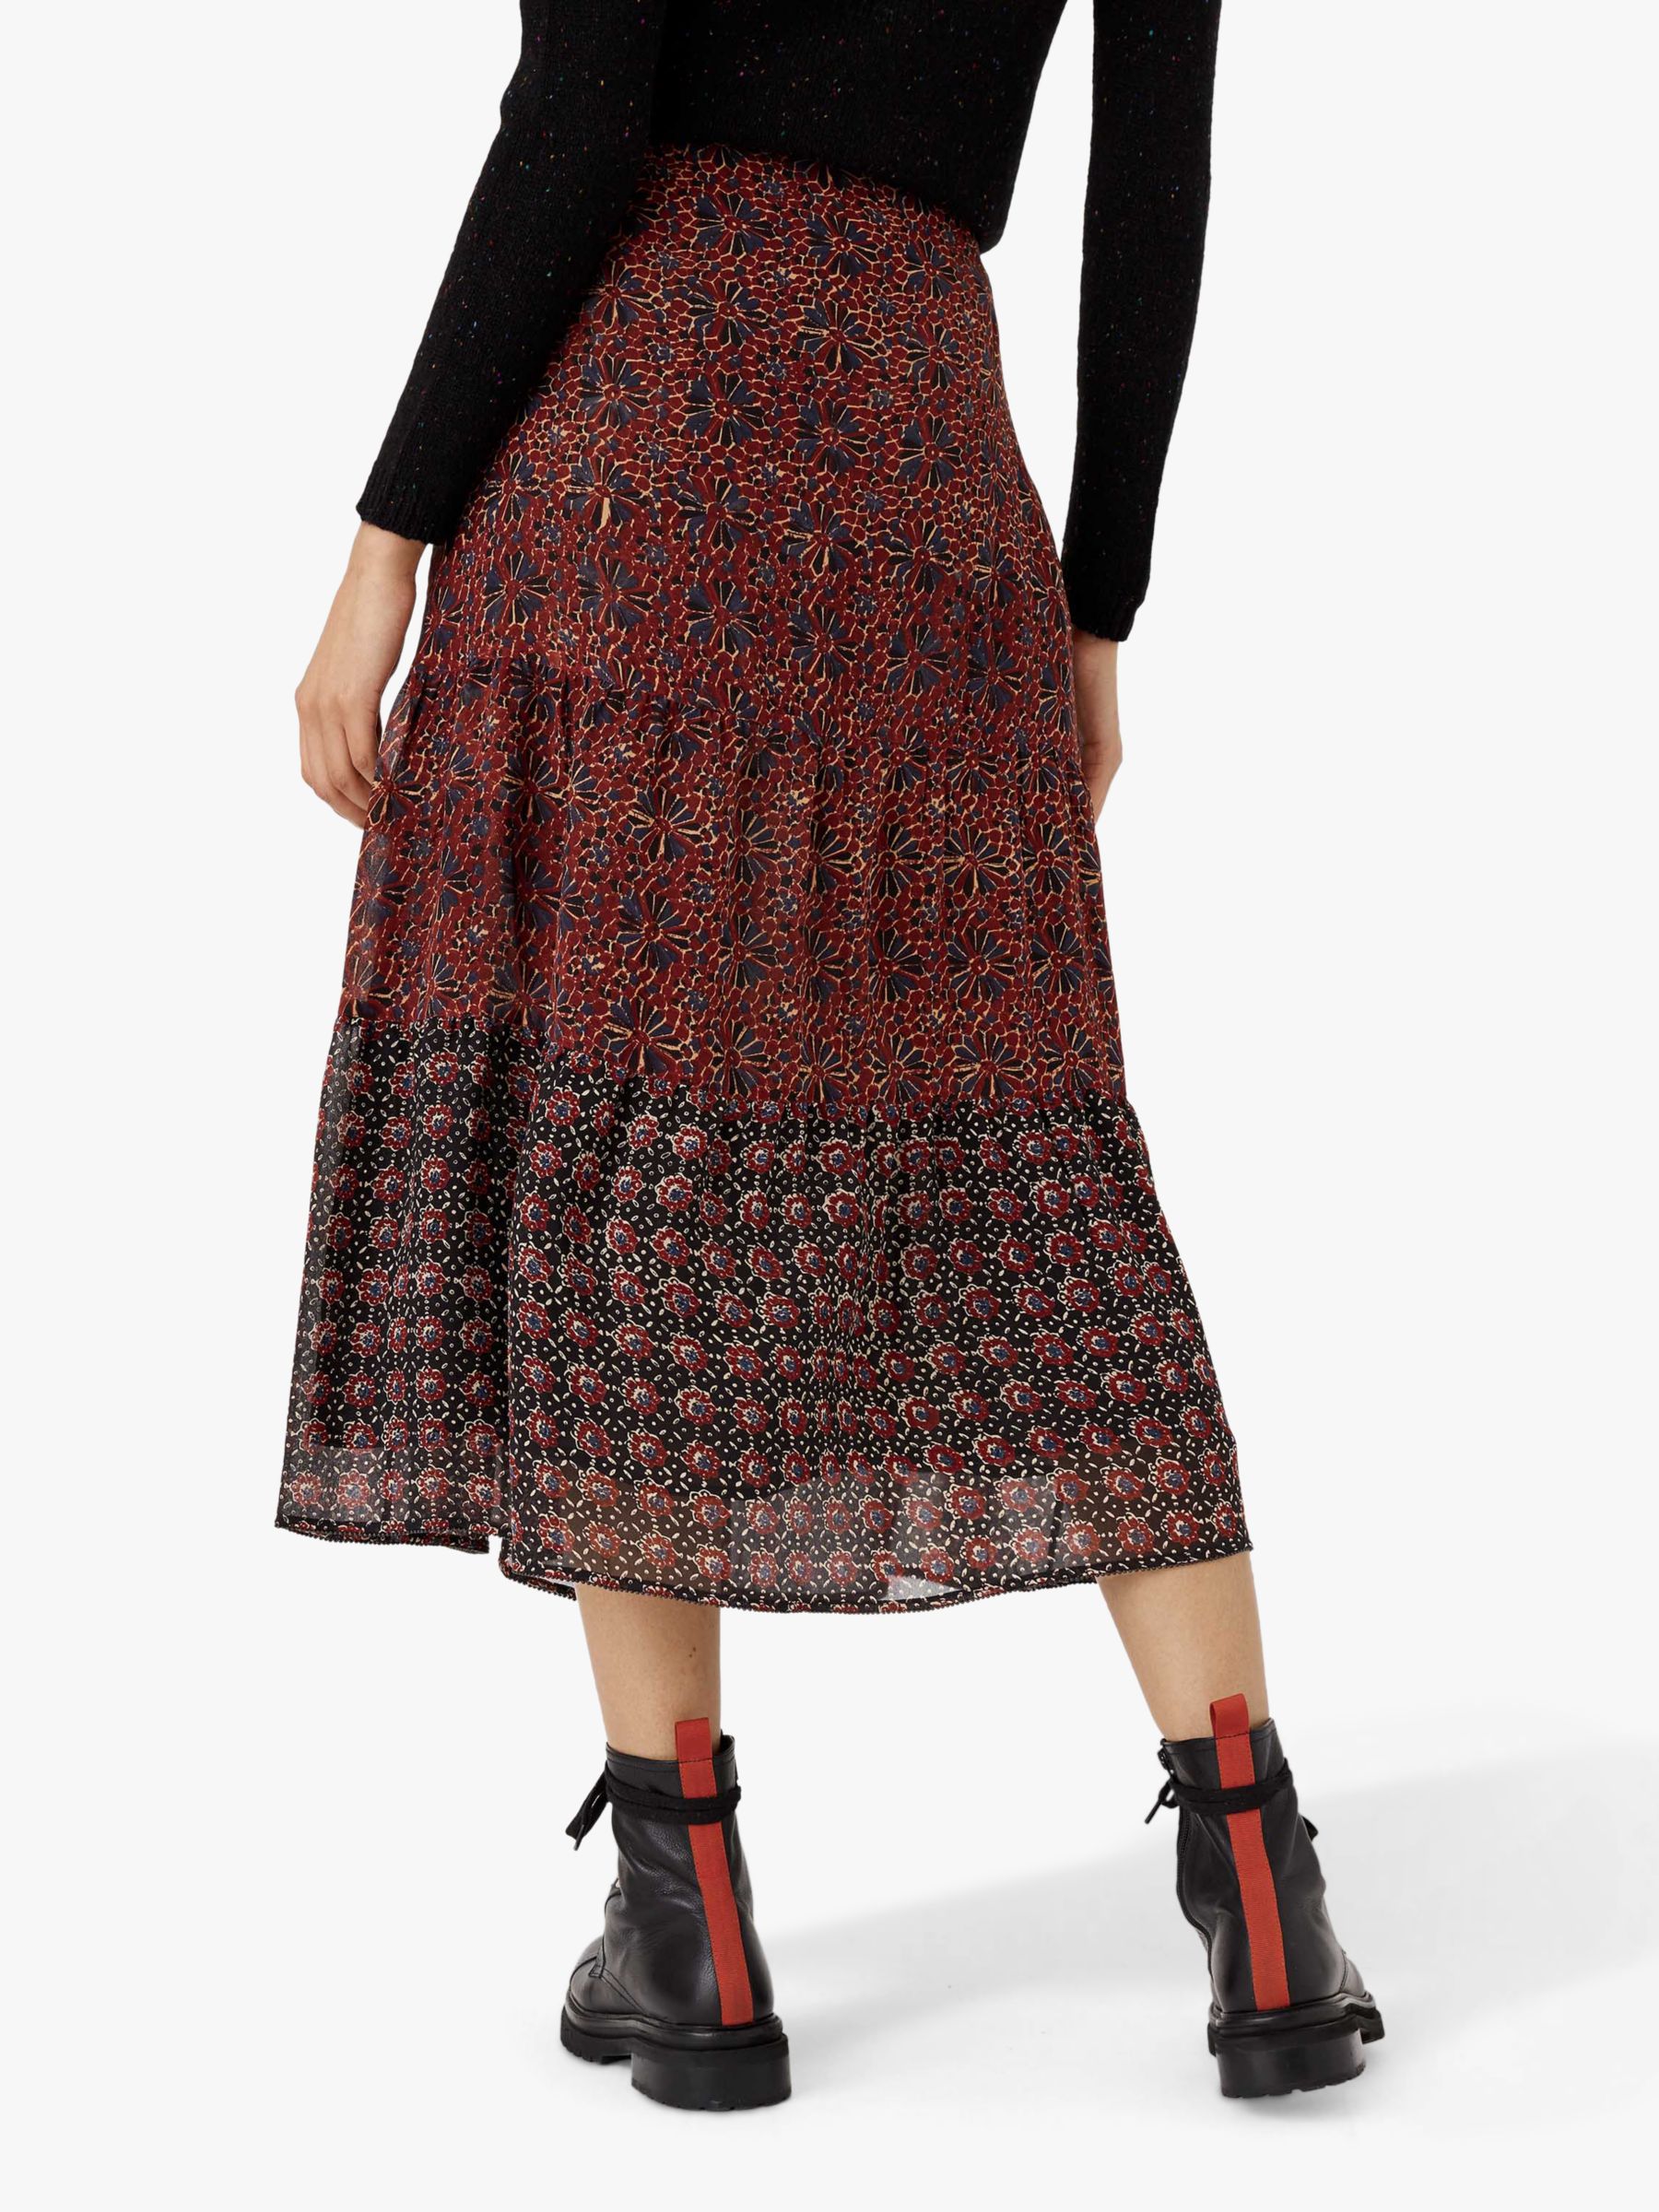 Brora Patchwork Silk Tiered Skirt, Copper/Indigo at John Lewis & Partners